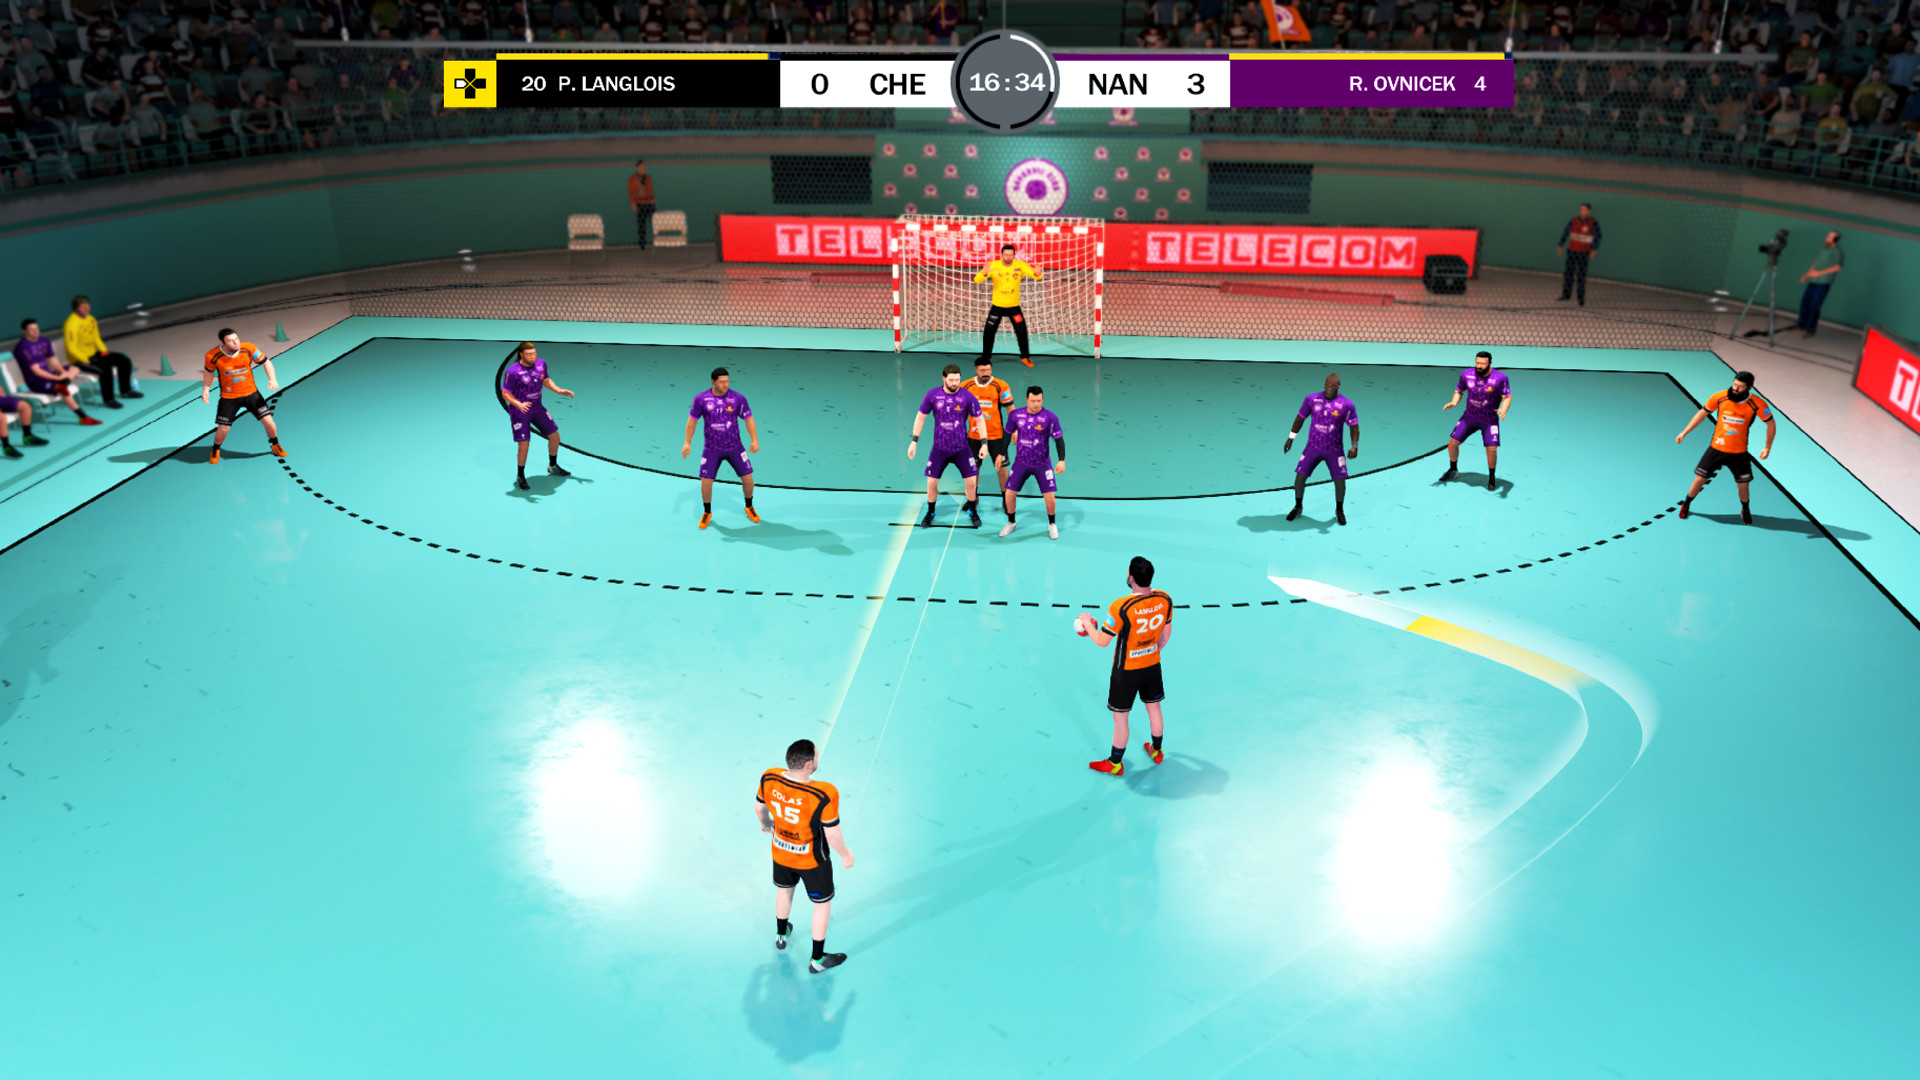 handball-21-pc-screenshot-02